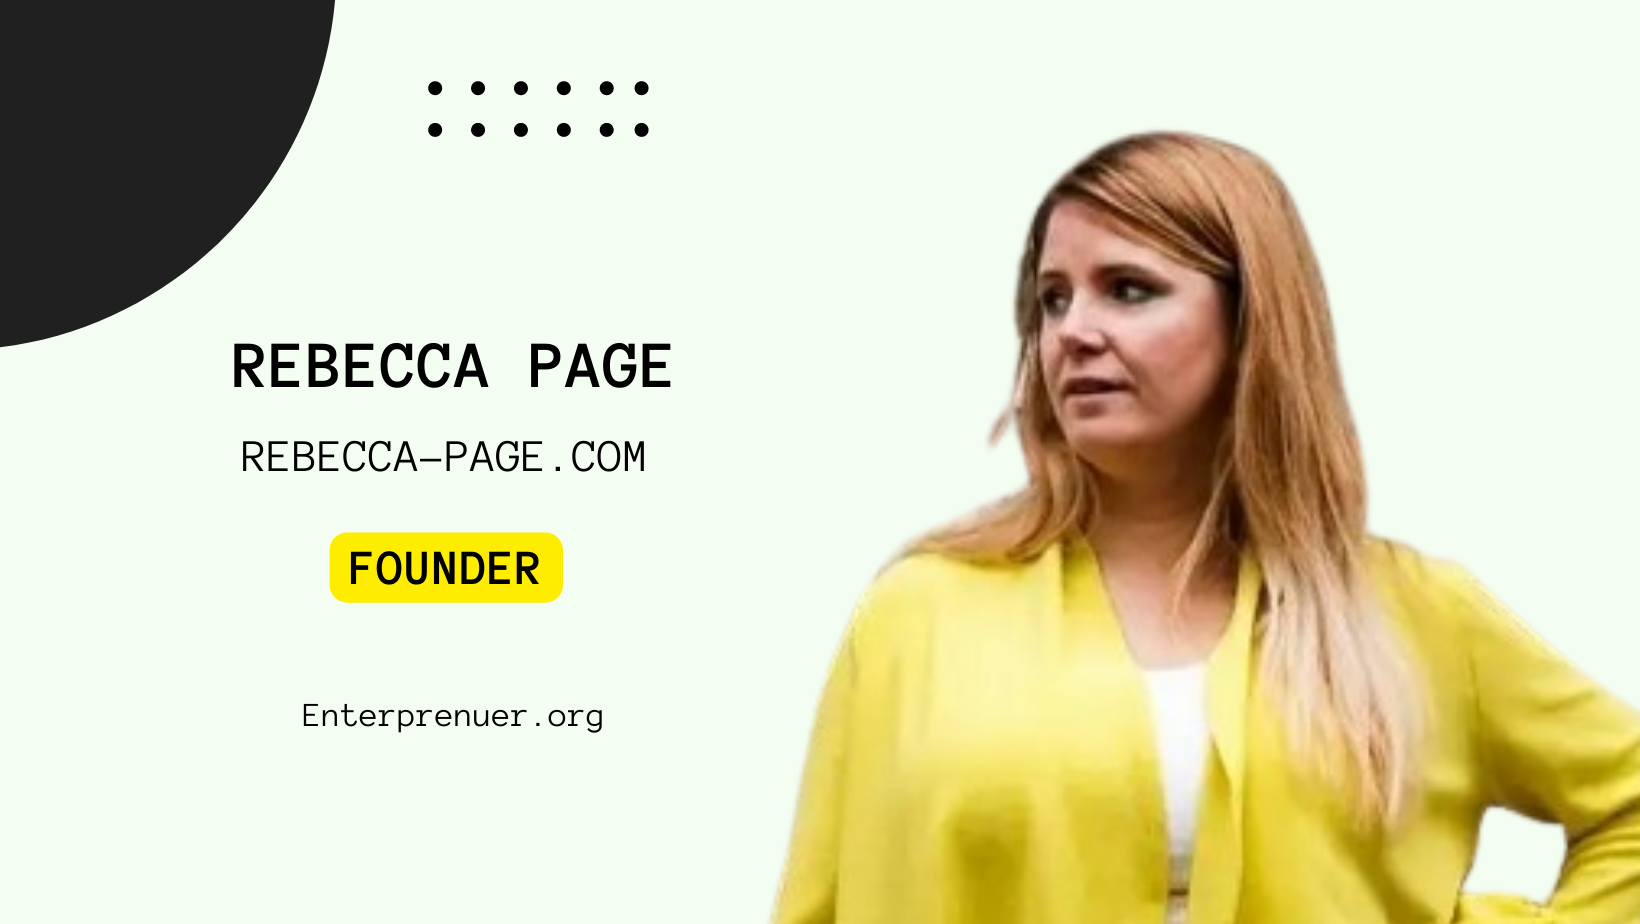 Rebecca Page Co-Founder of Rebecca-Page.com